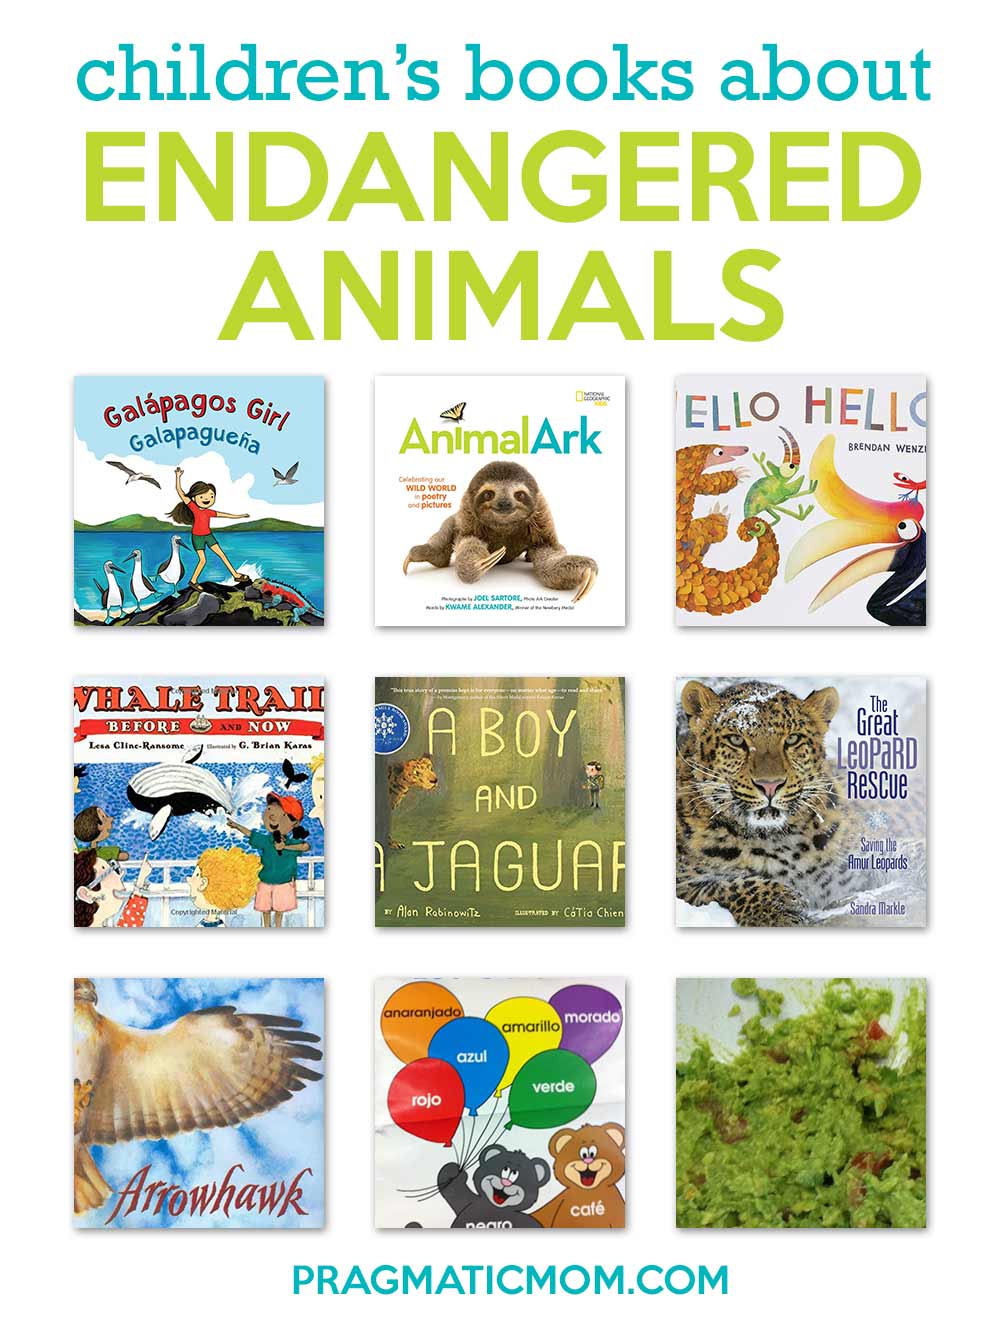 10 Books on Helping Endangered Animals & 3 Book GIVEAWAY! - Pragmatic Mom